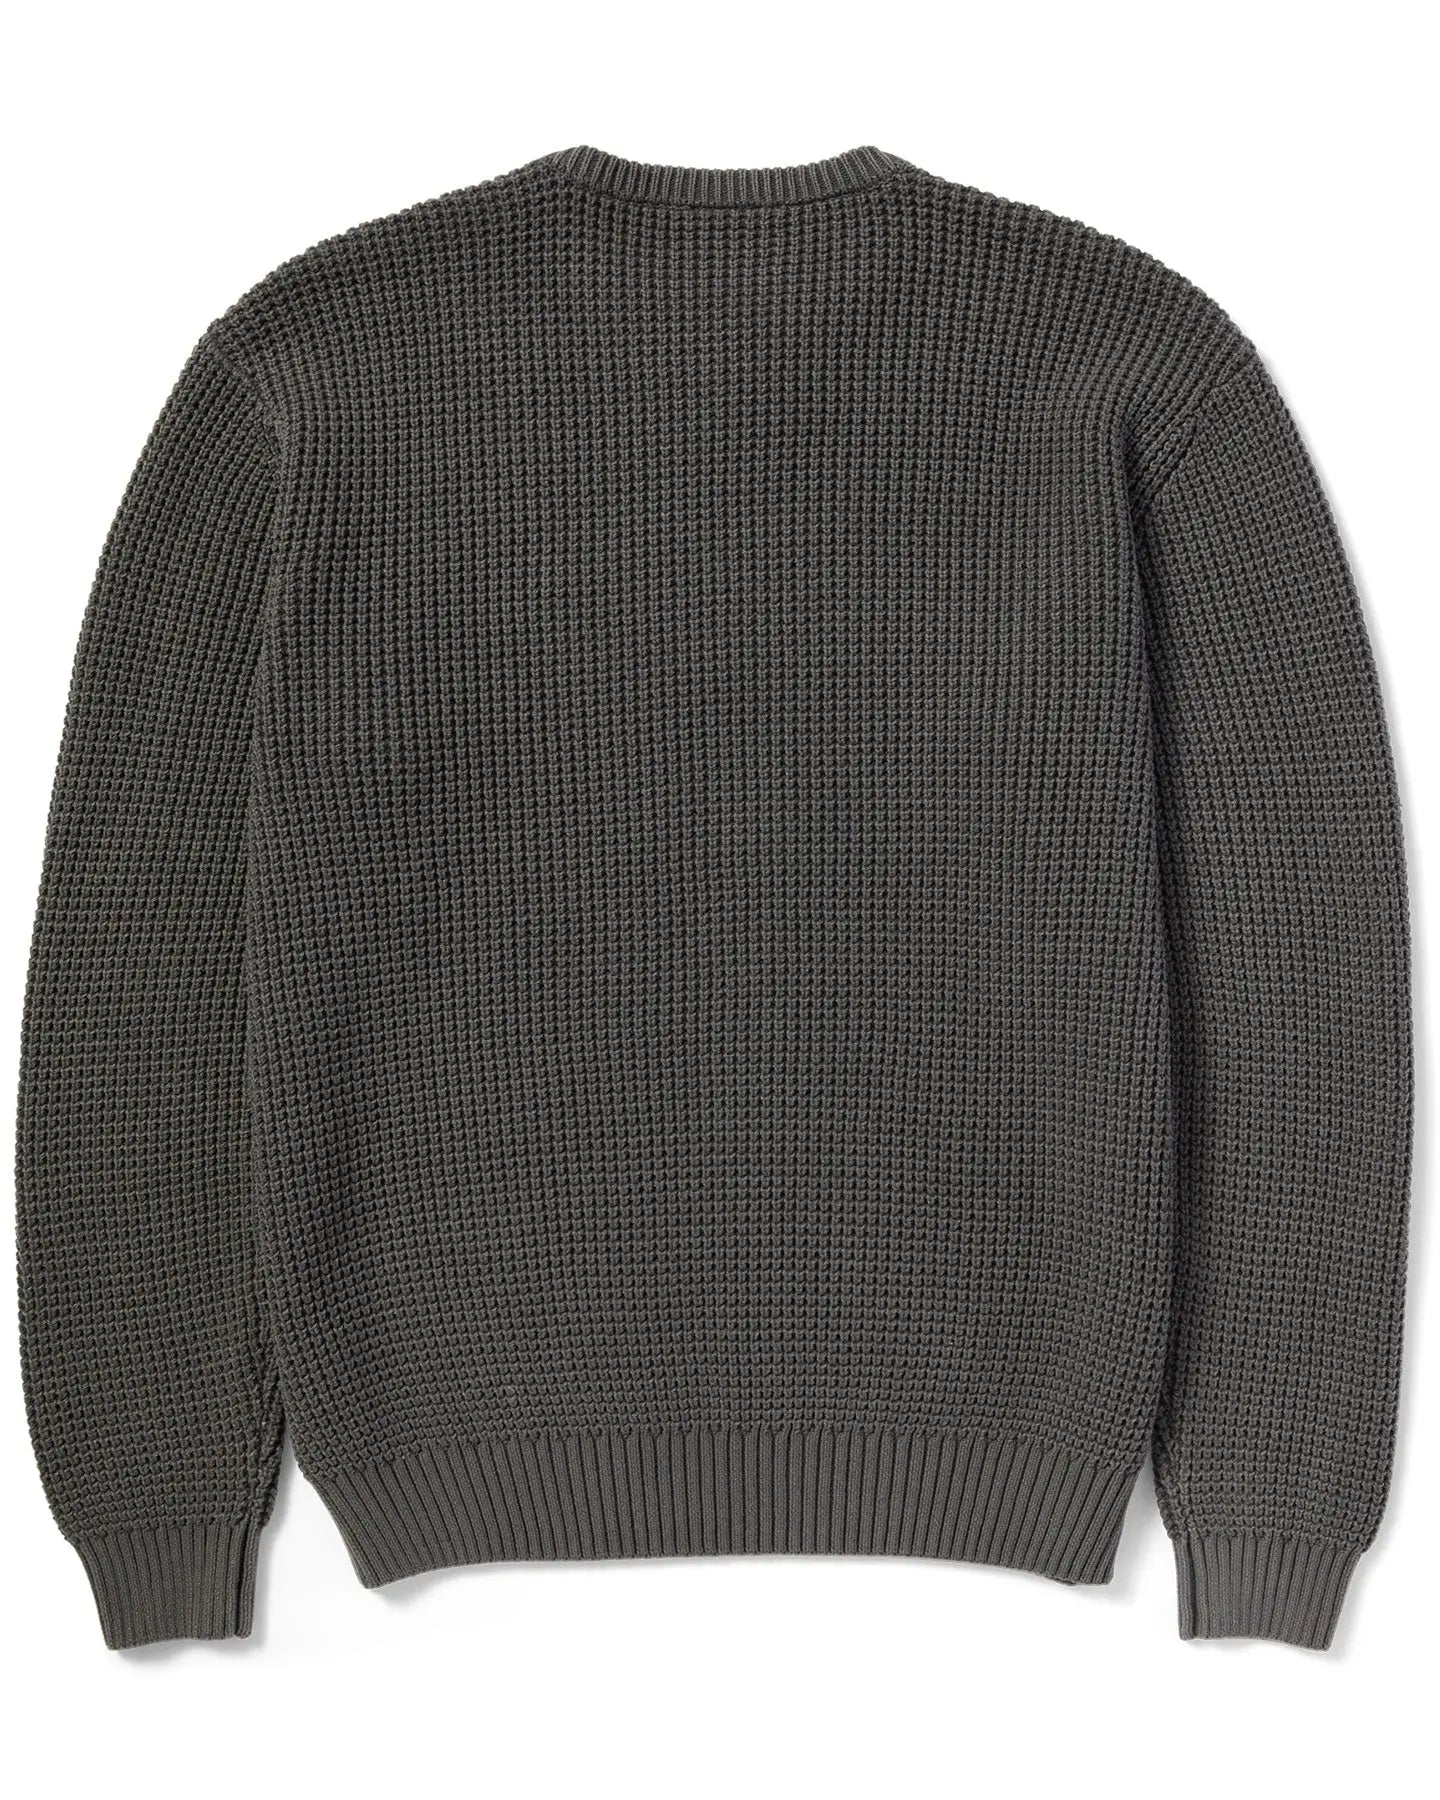 HUF Filmore Waffle Knit Sweater - Black Sweaters